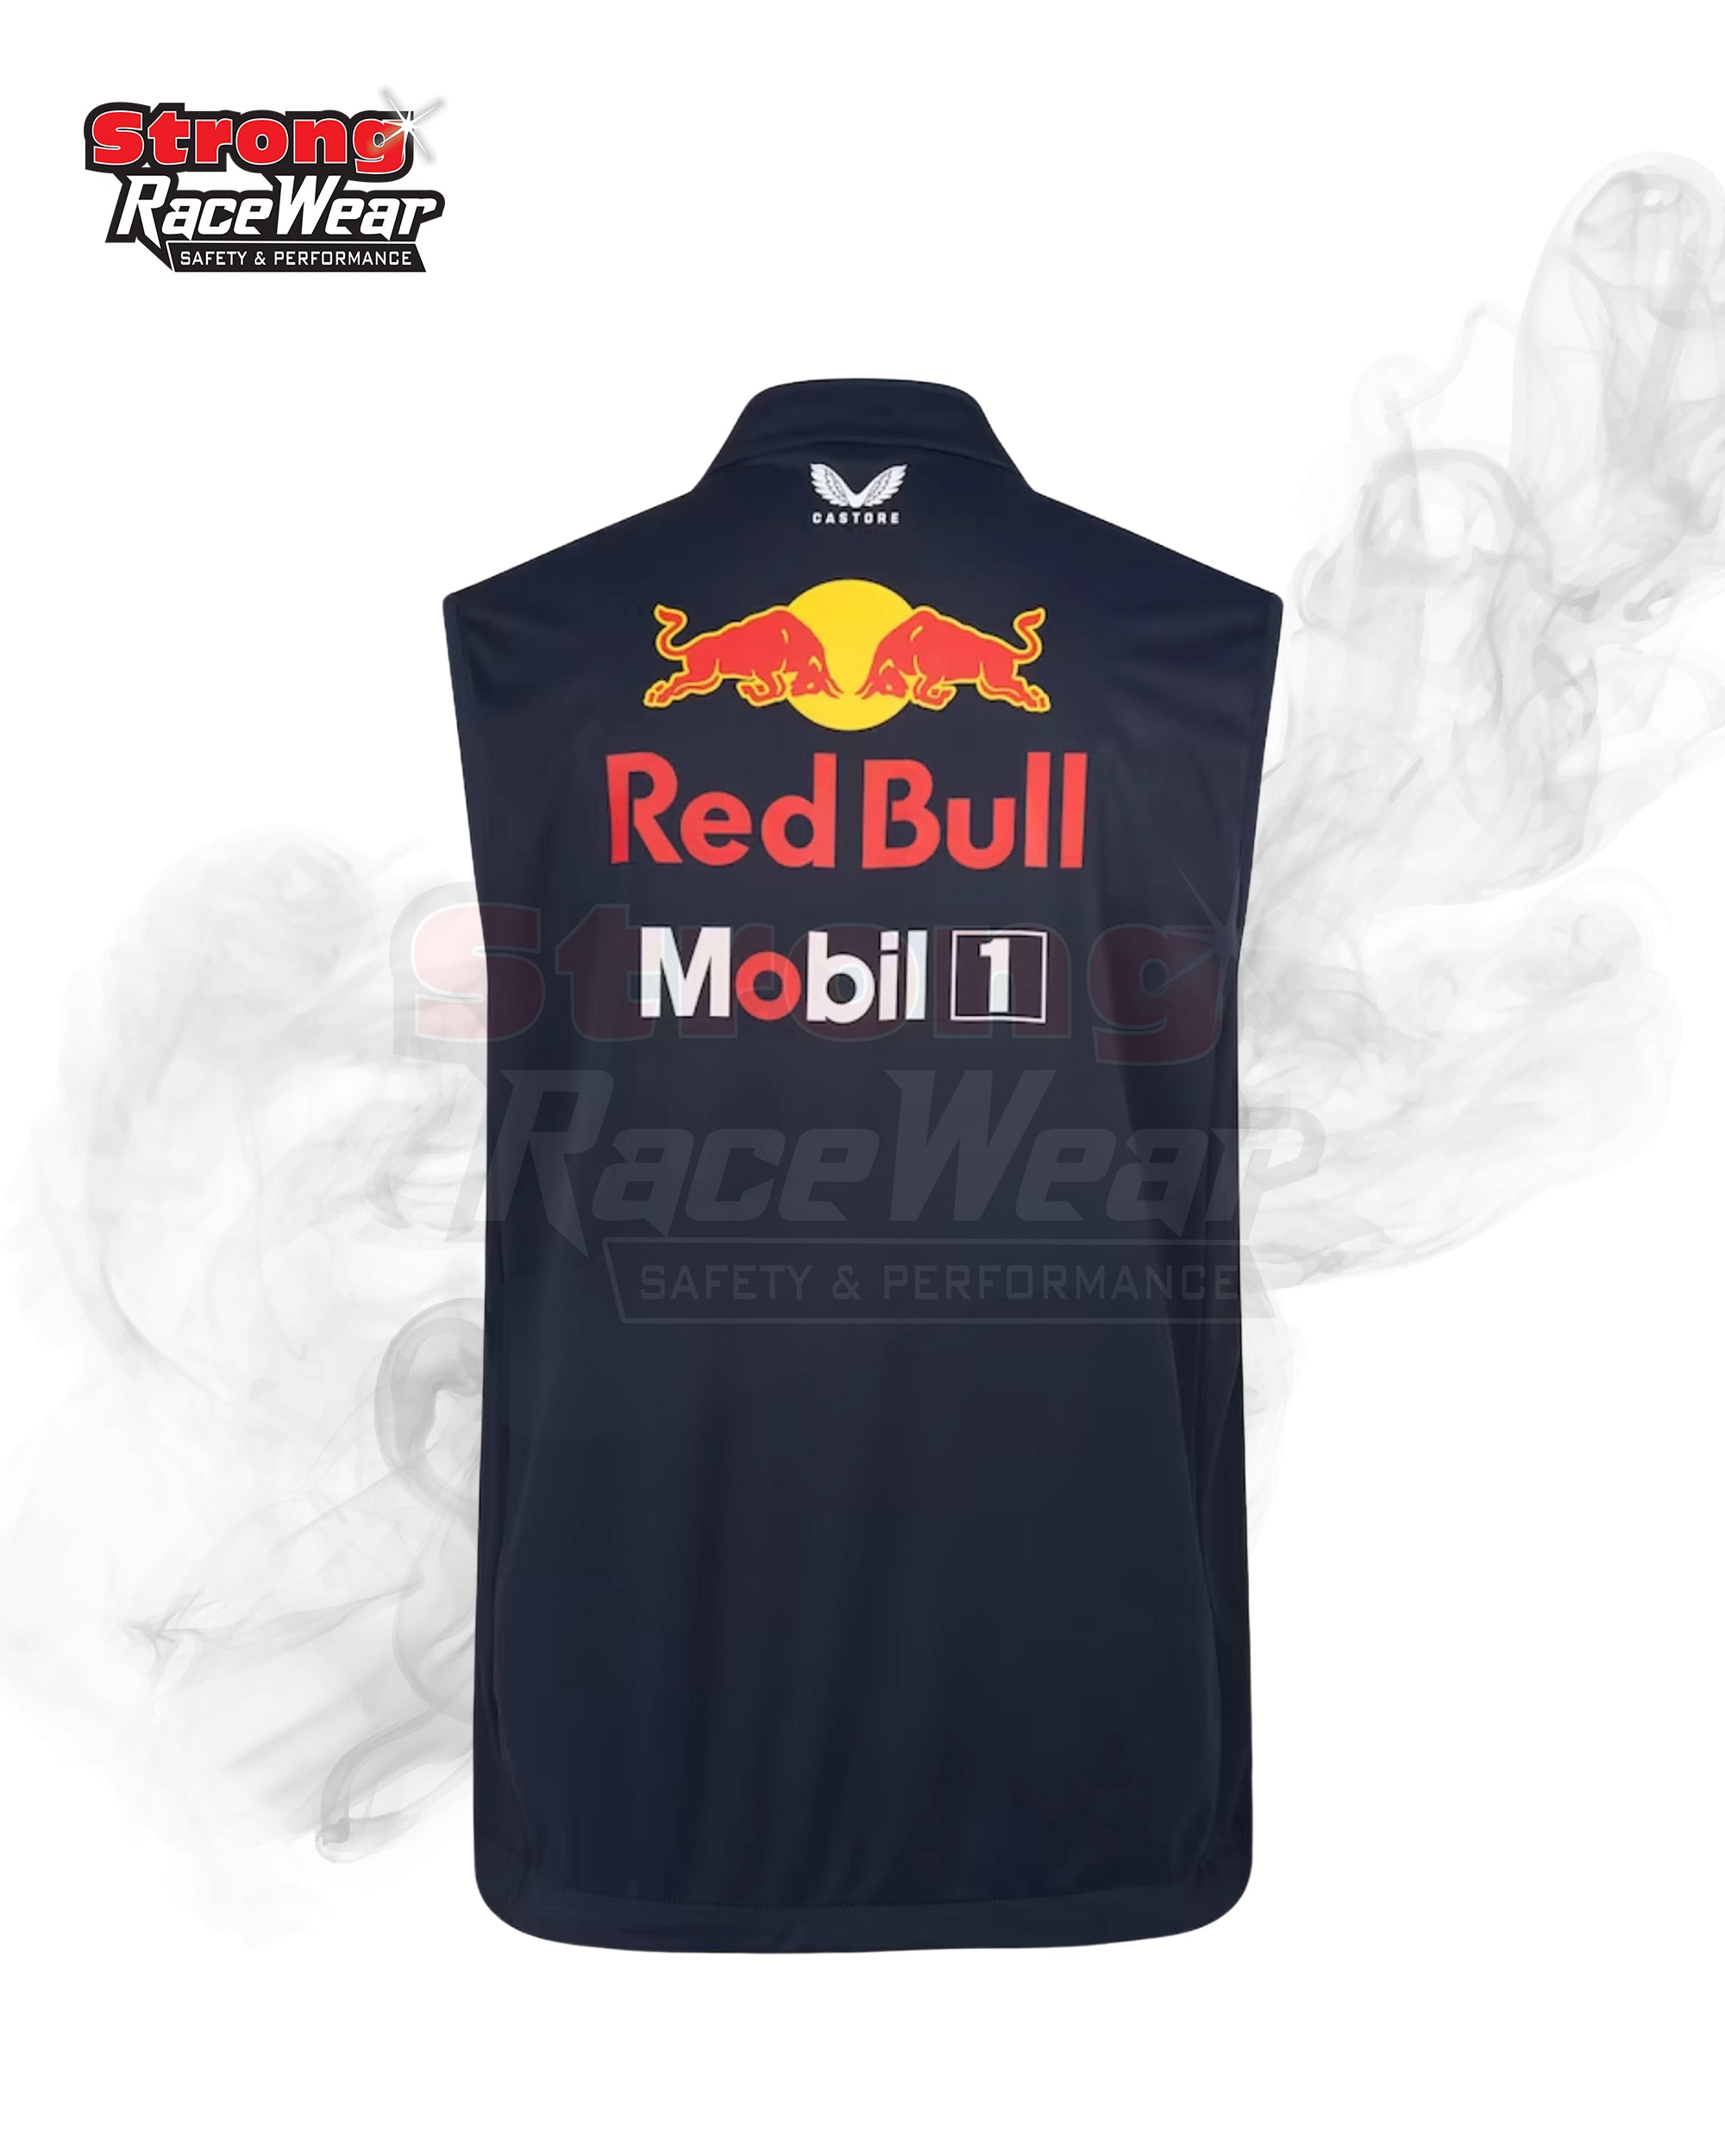 Oracle Red Bull Racing 2023 Team Gilet Jacket Softshell